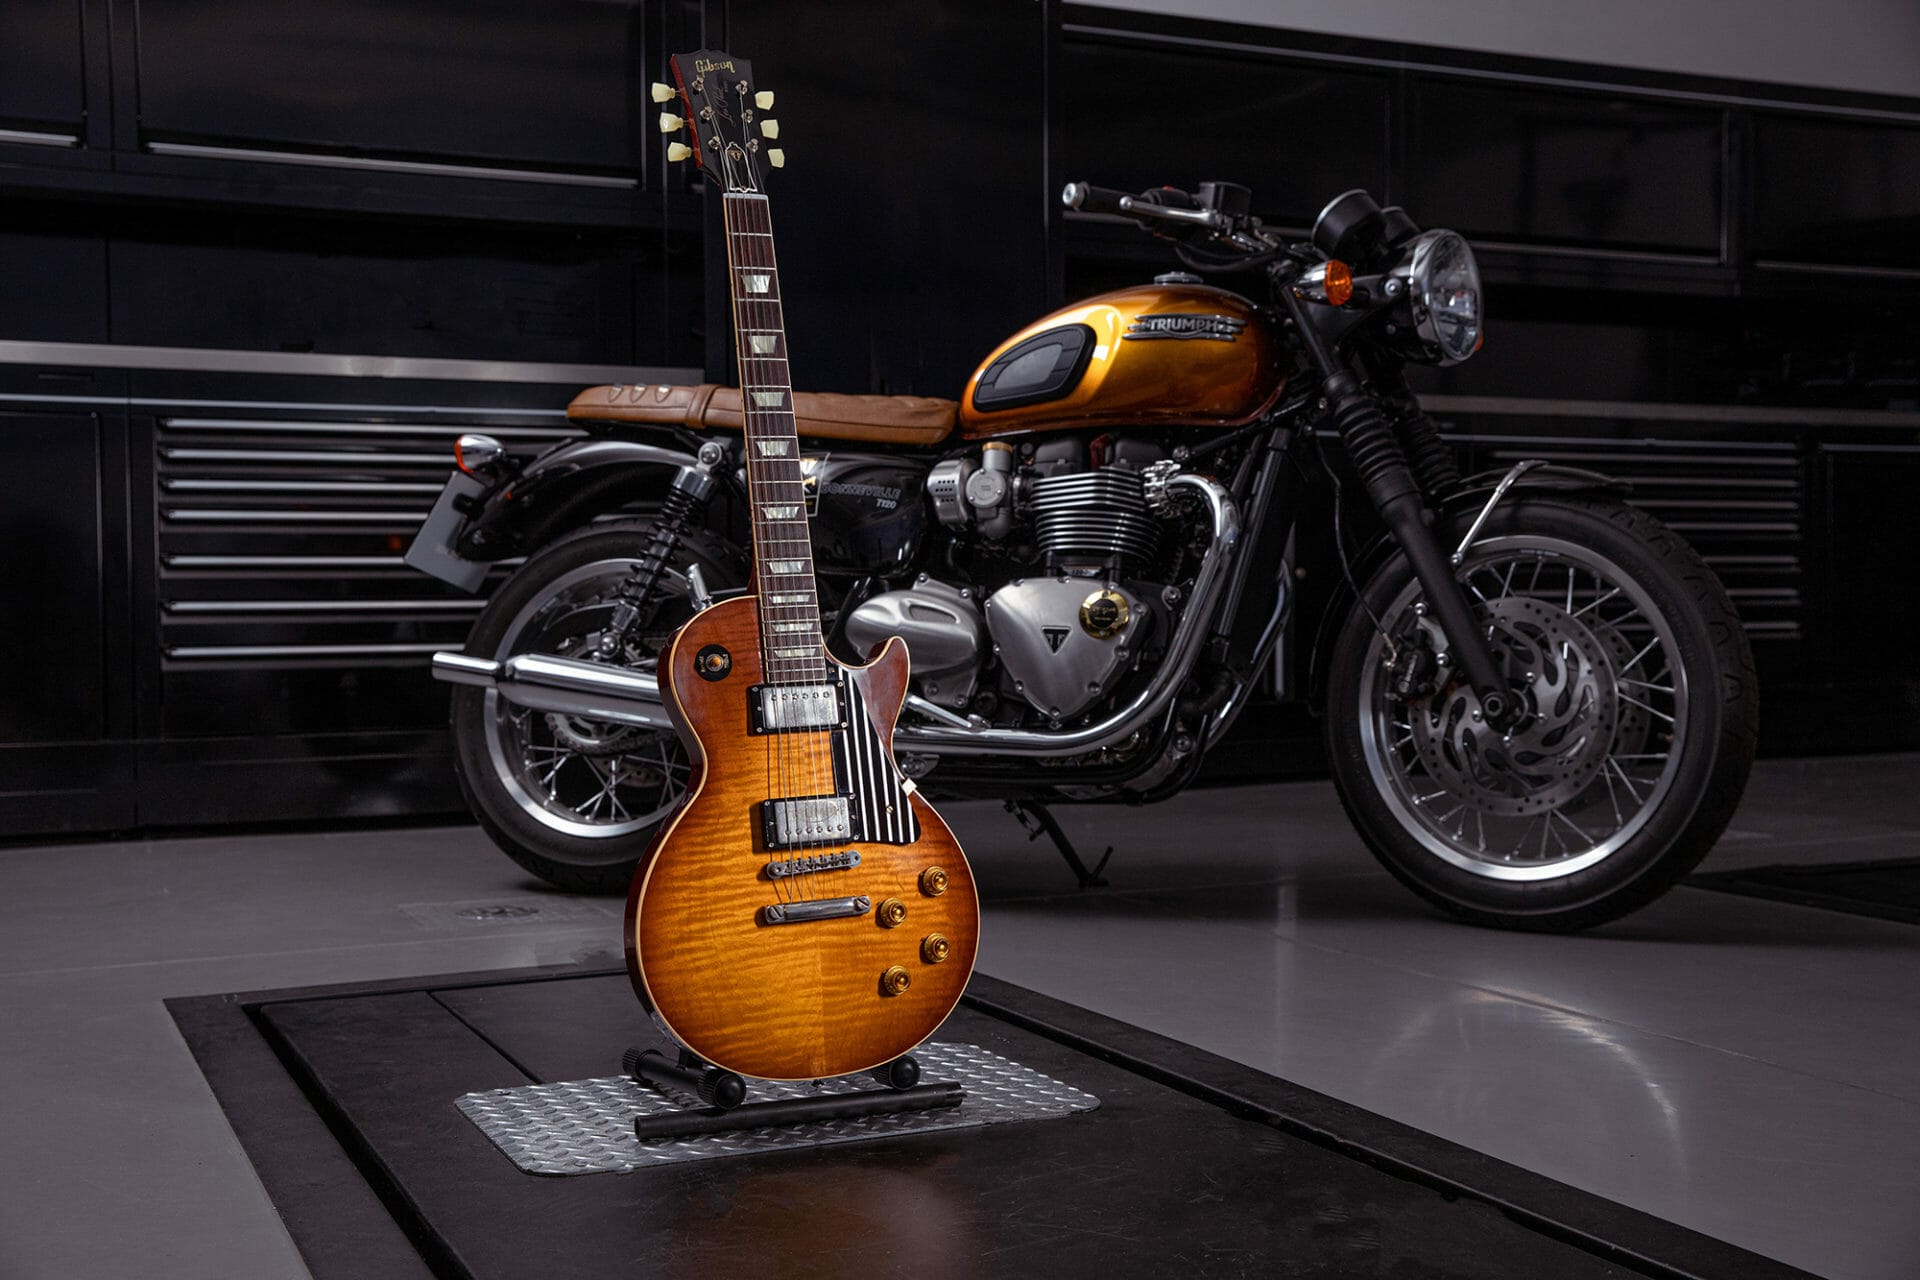 TRIUMPH & Gibson - Creations for the Gentlemans Ride
- also in the MOTORCYCLES.NEWS APP via @motorradnachrichten